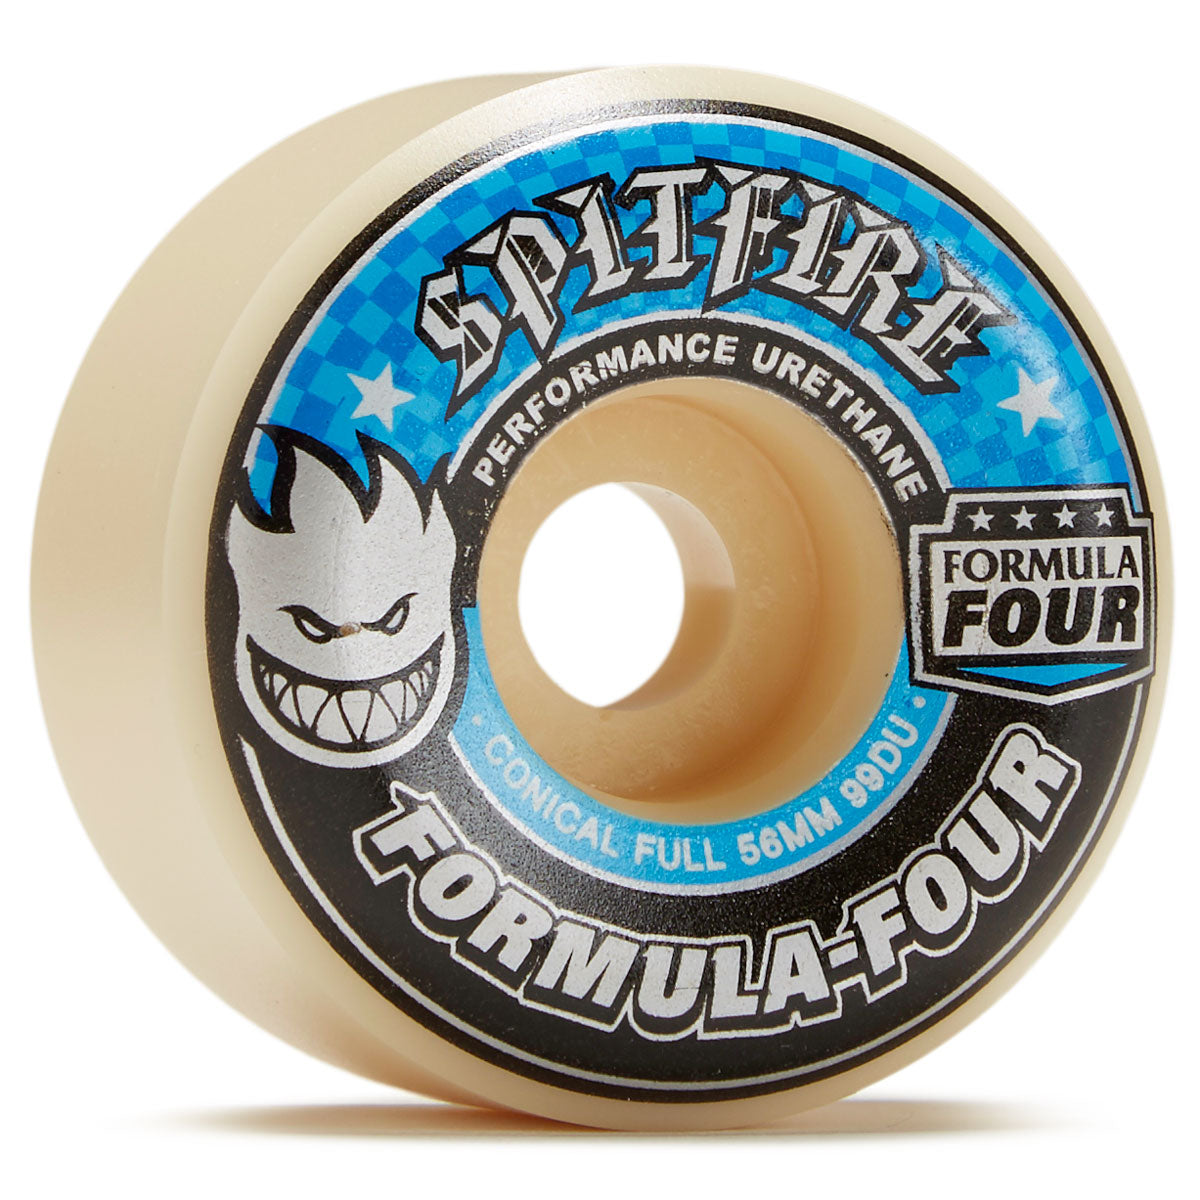 Spitfire F4 99d Conical Full Skateboard Wheels - 56mm image 1